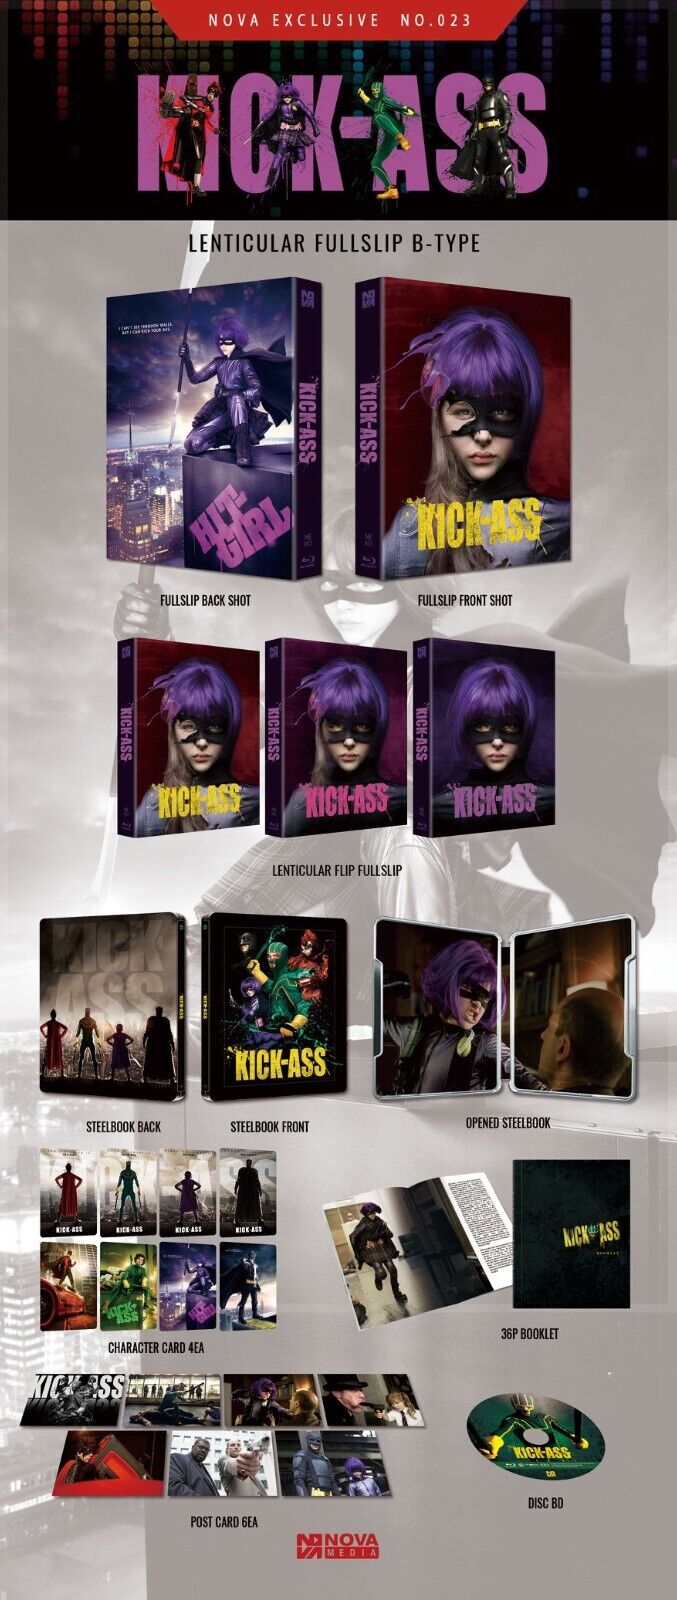 Kick-Ass Blu-ray Steelbook Novamedia  Exclusive #23 One Click Box Set